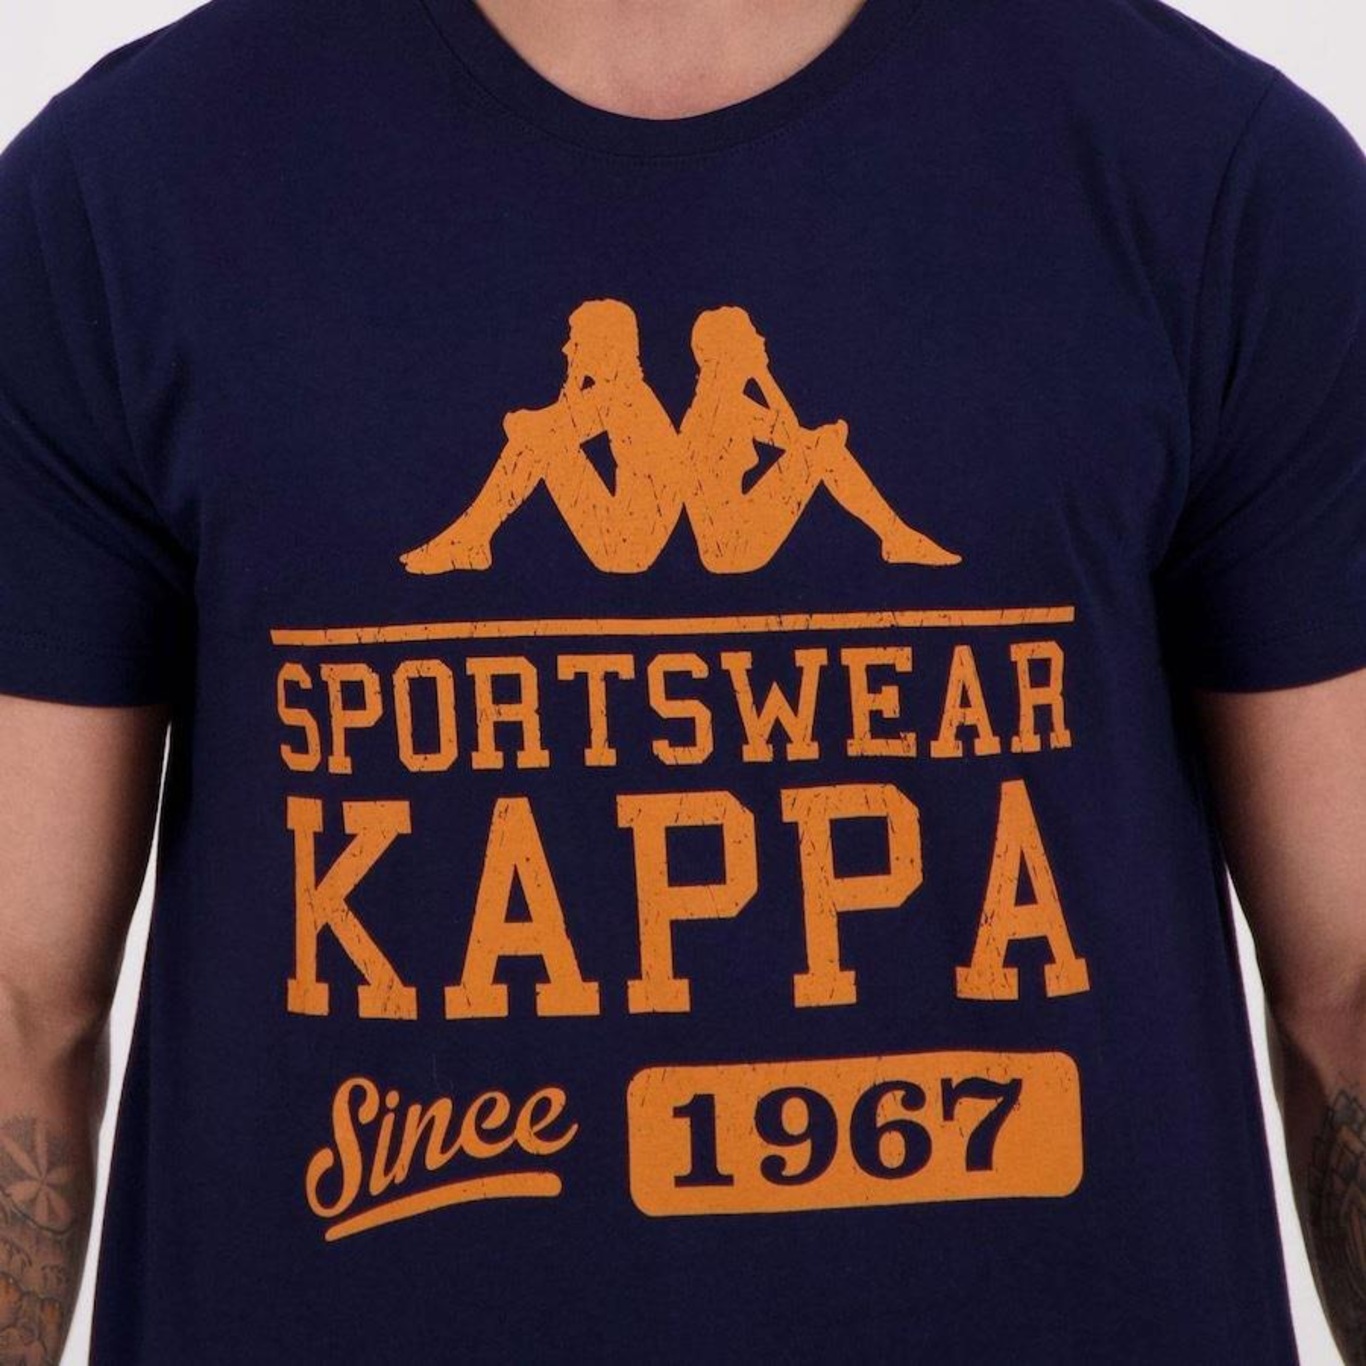 Camiseta Kappa Sportswear Masculina